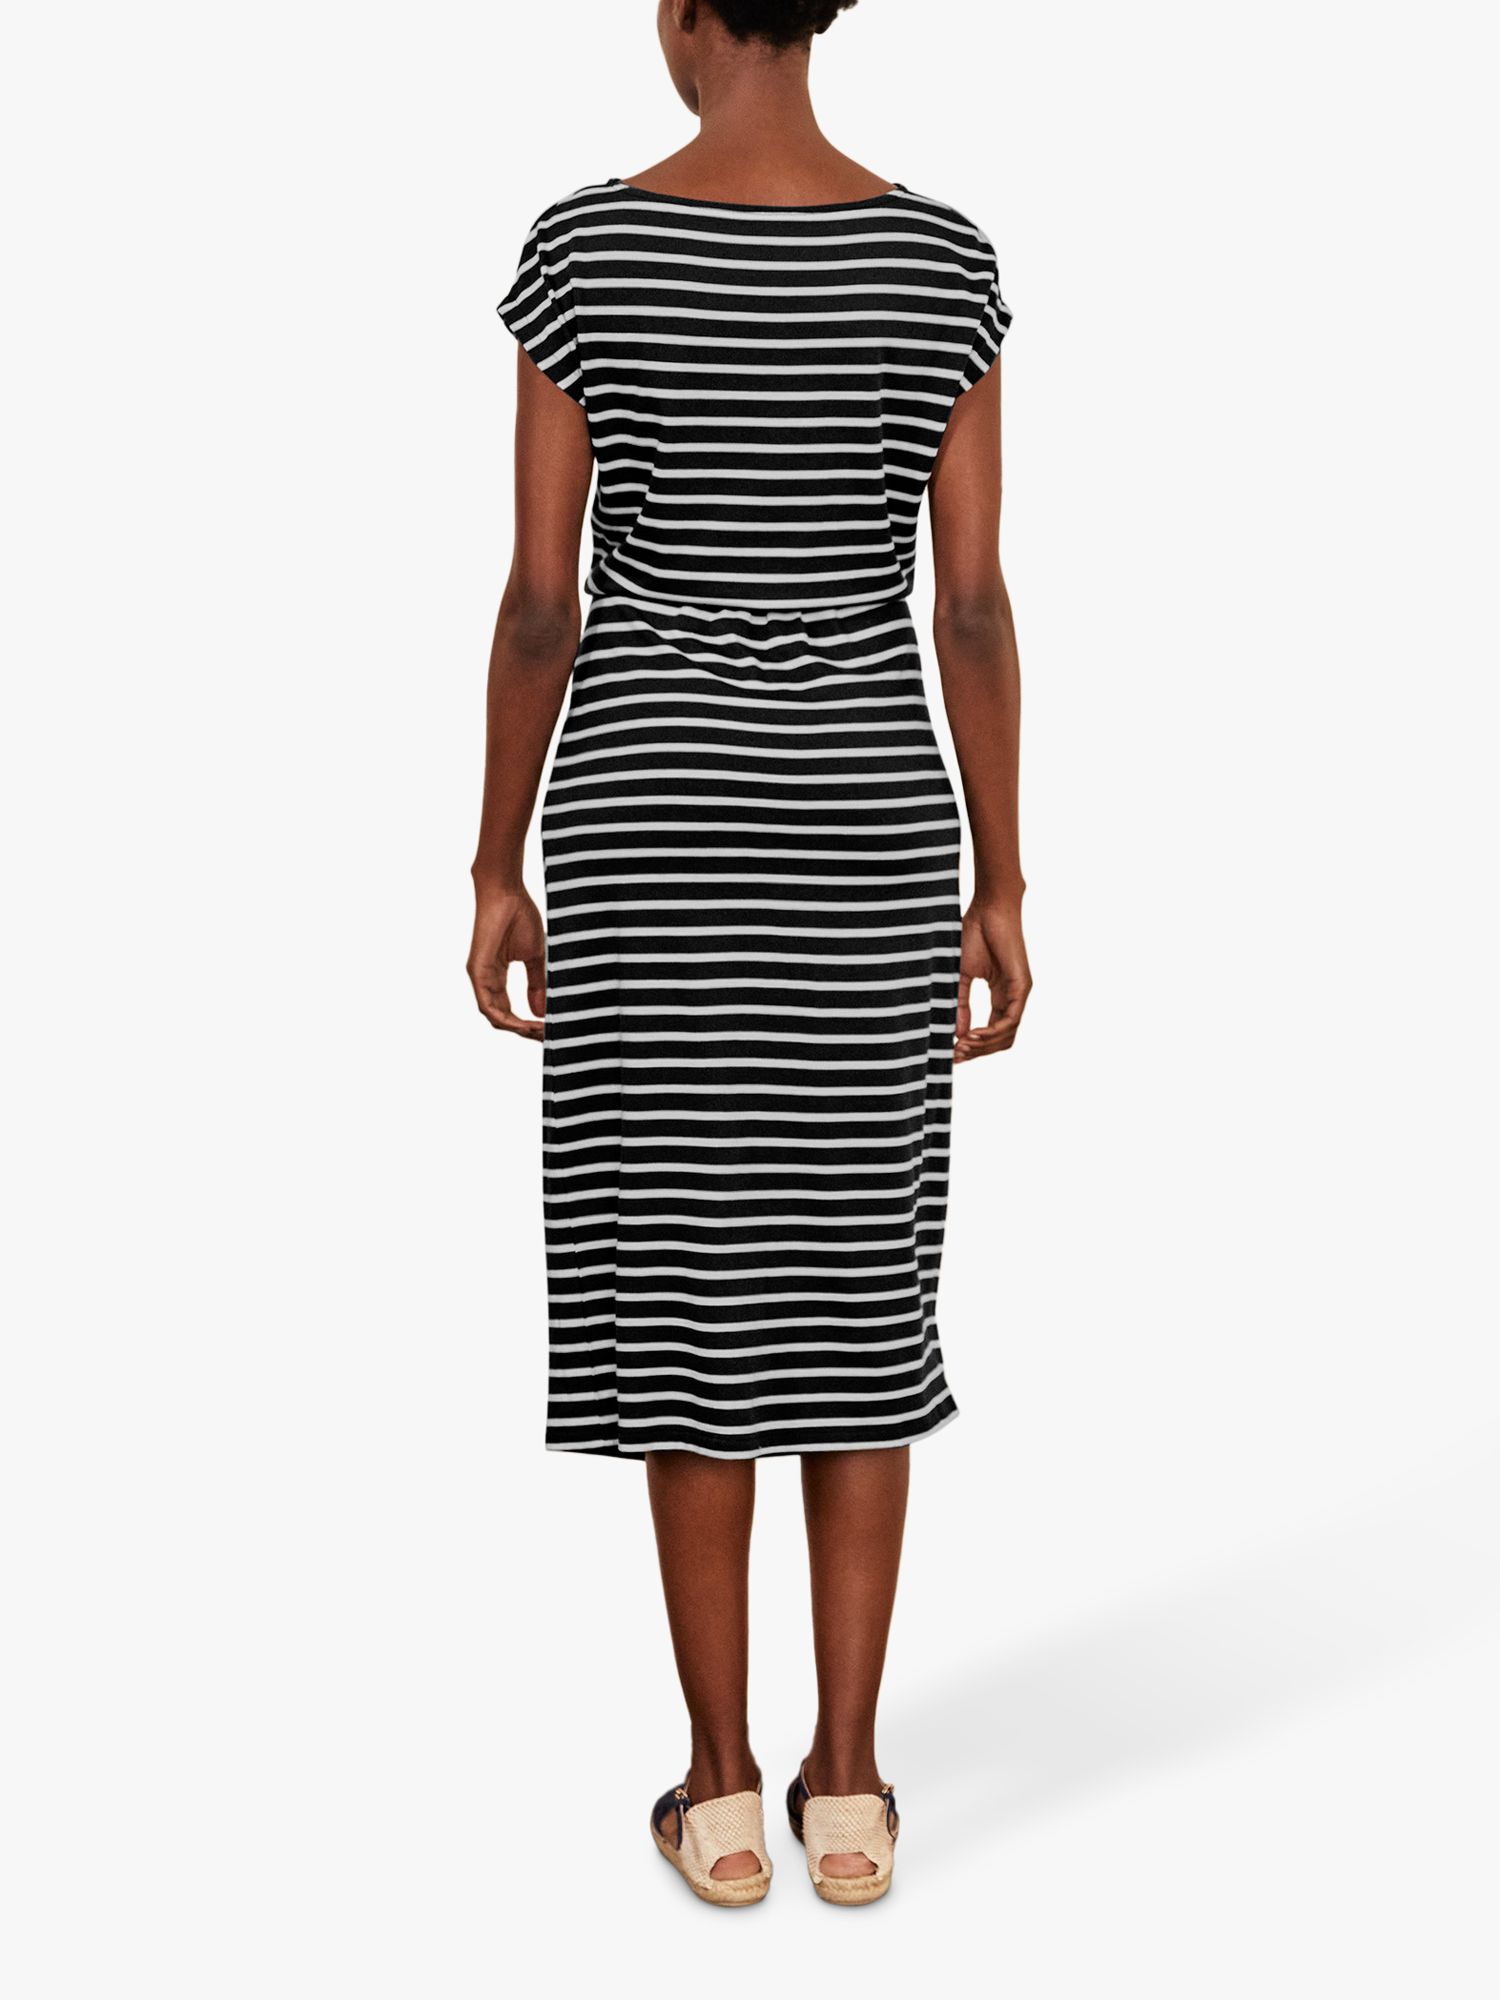 Boden Odile Stripe Midi Dress, Navy/Ivory at John Lewis & Partners